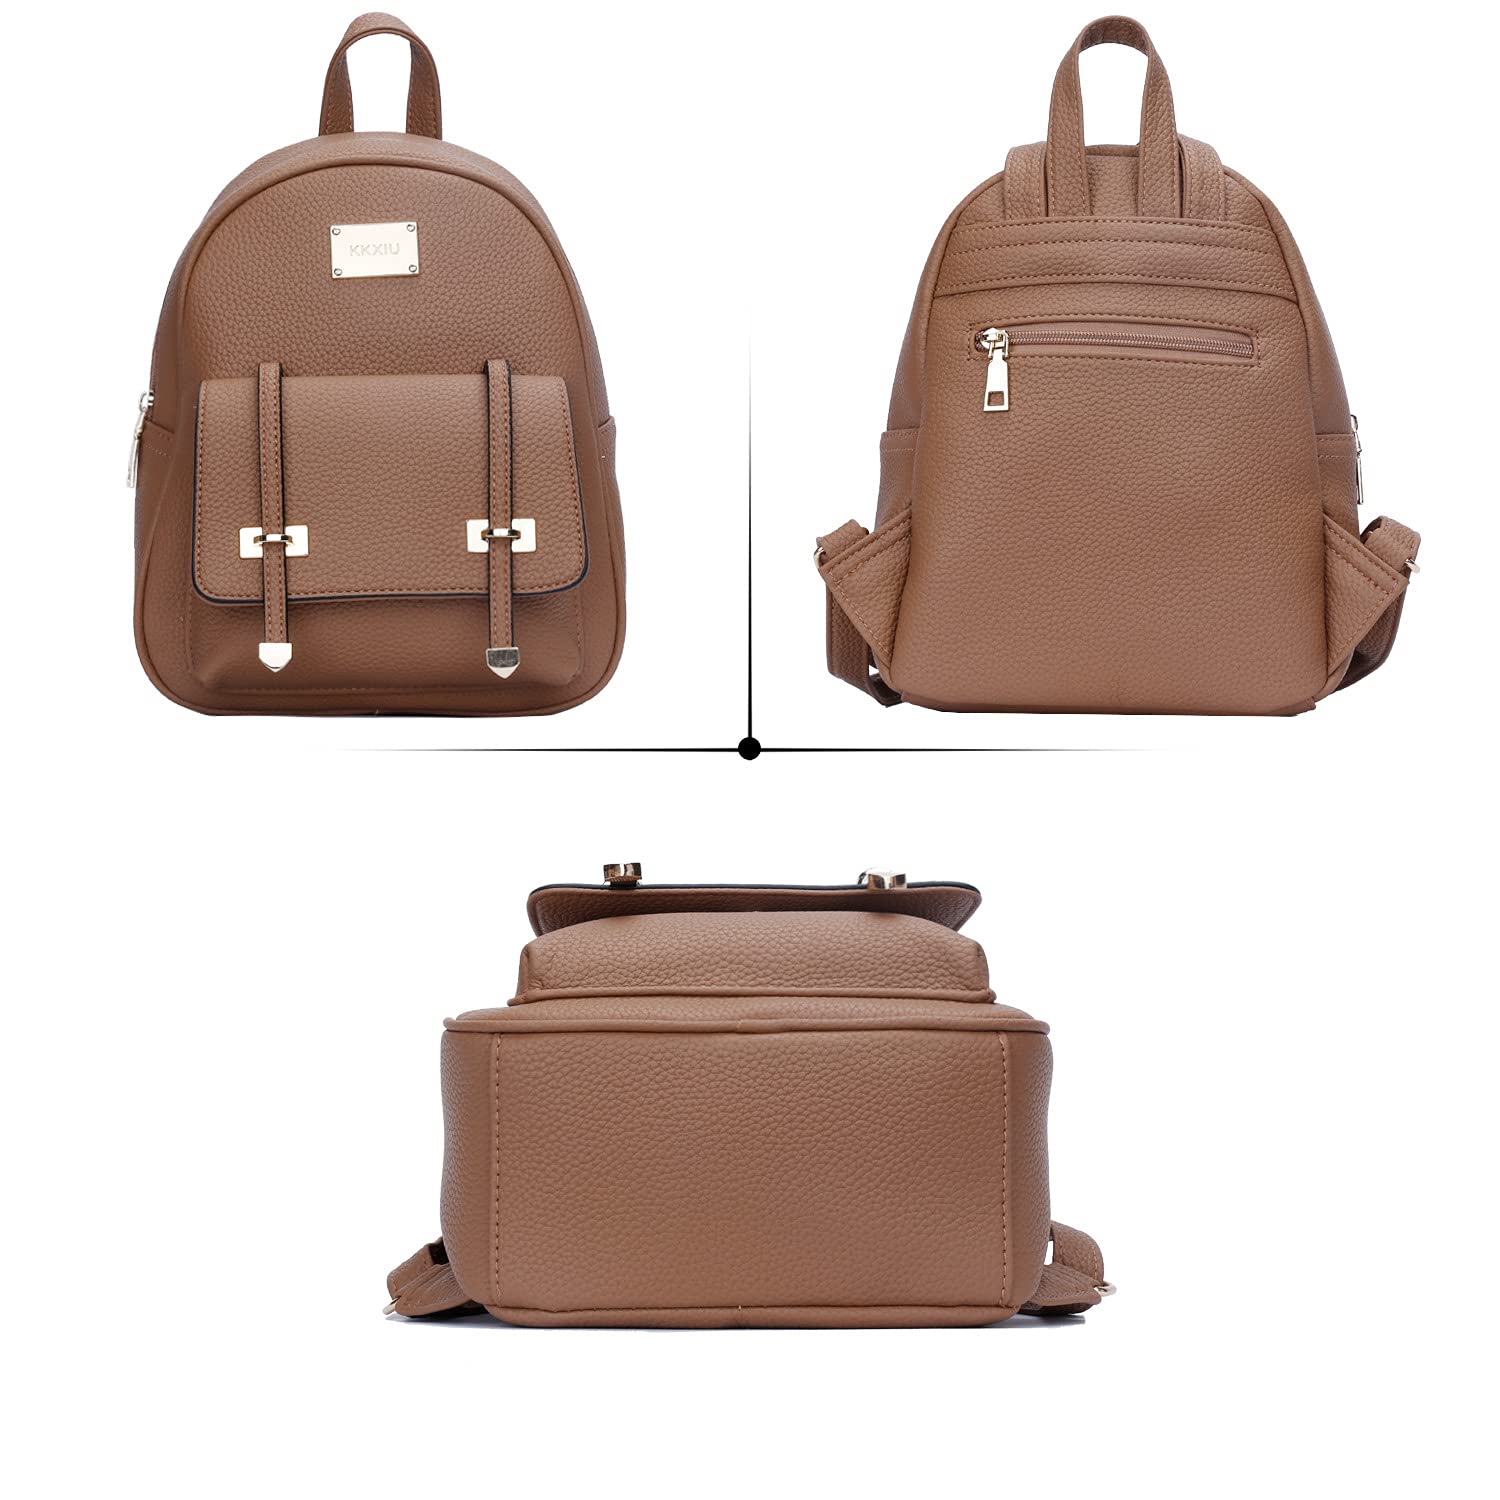 KKXIU Women Small Backpack Purse Convertible Leather Mini Daypacks Crossbody Shoulder Bag For Girls